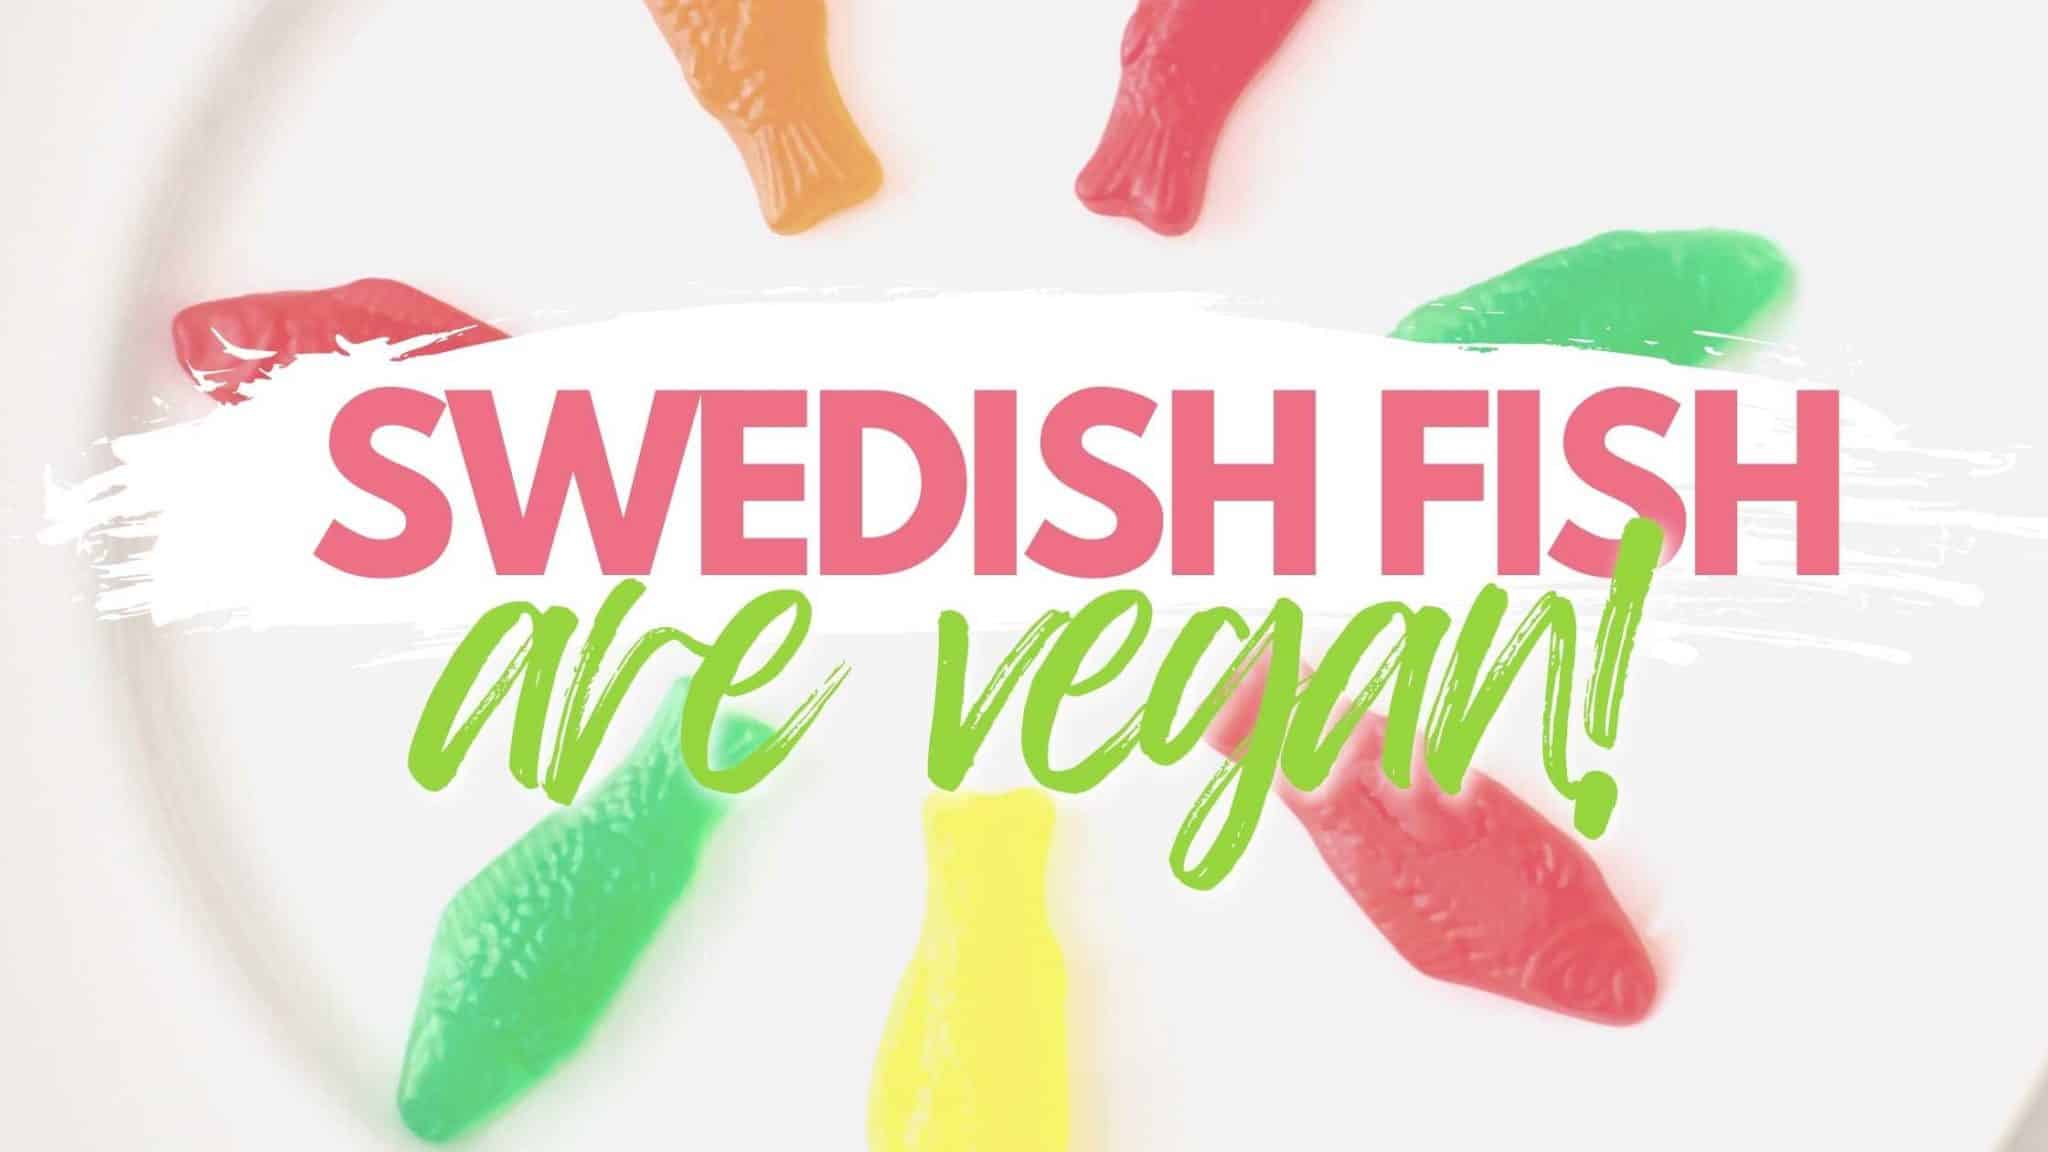 swedish fish are vegan candy graphic